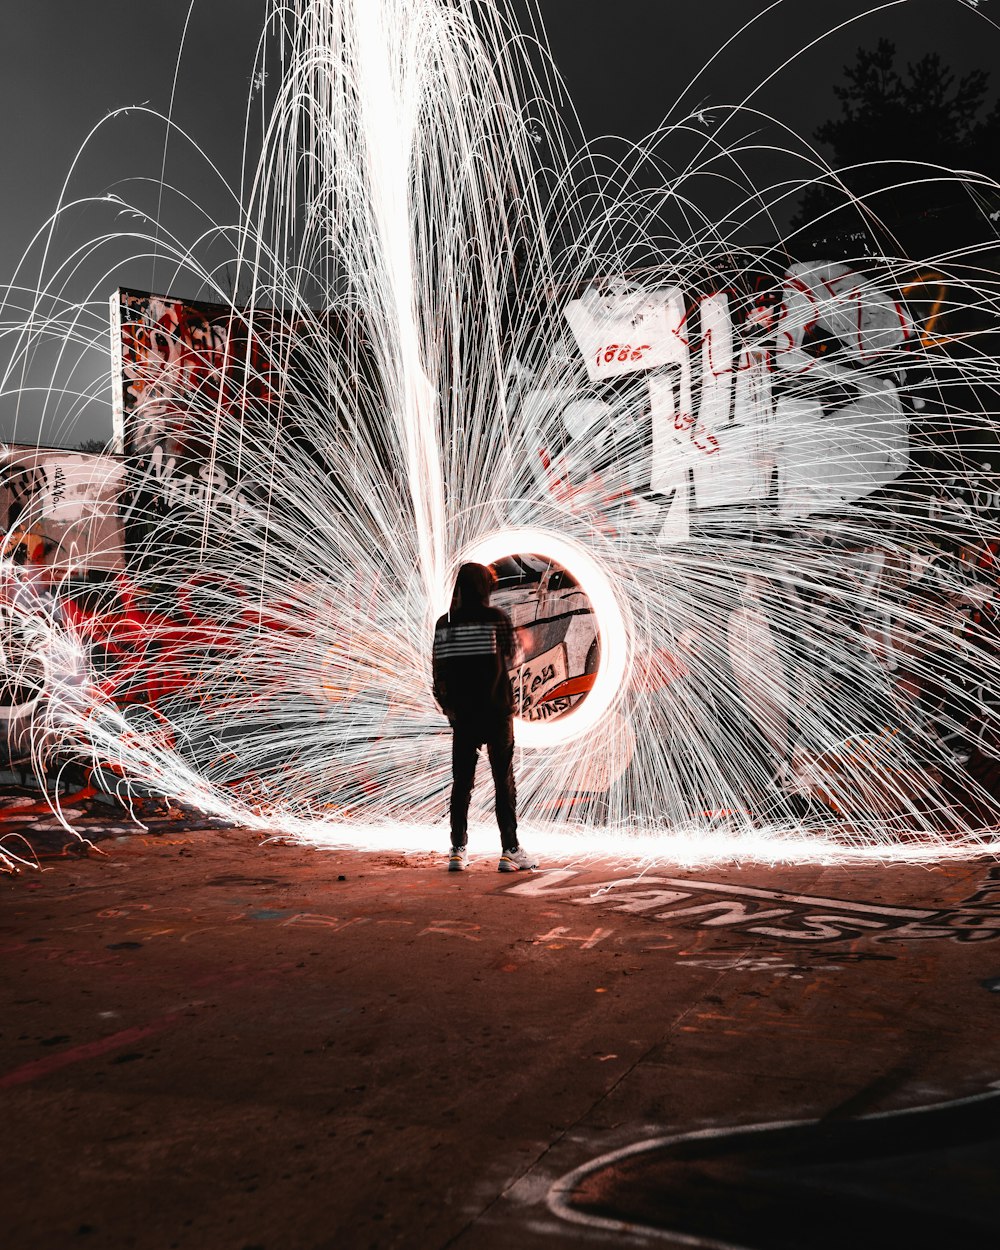 steel wool photography of man near graffiti wall at night